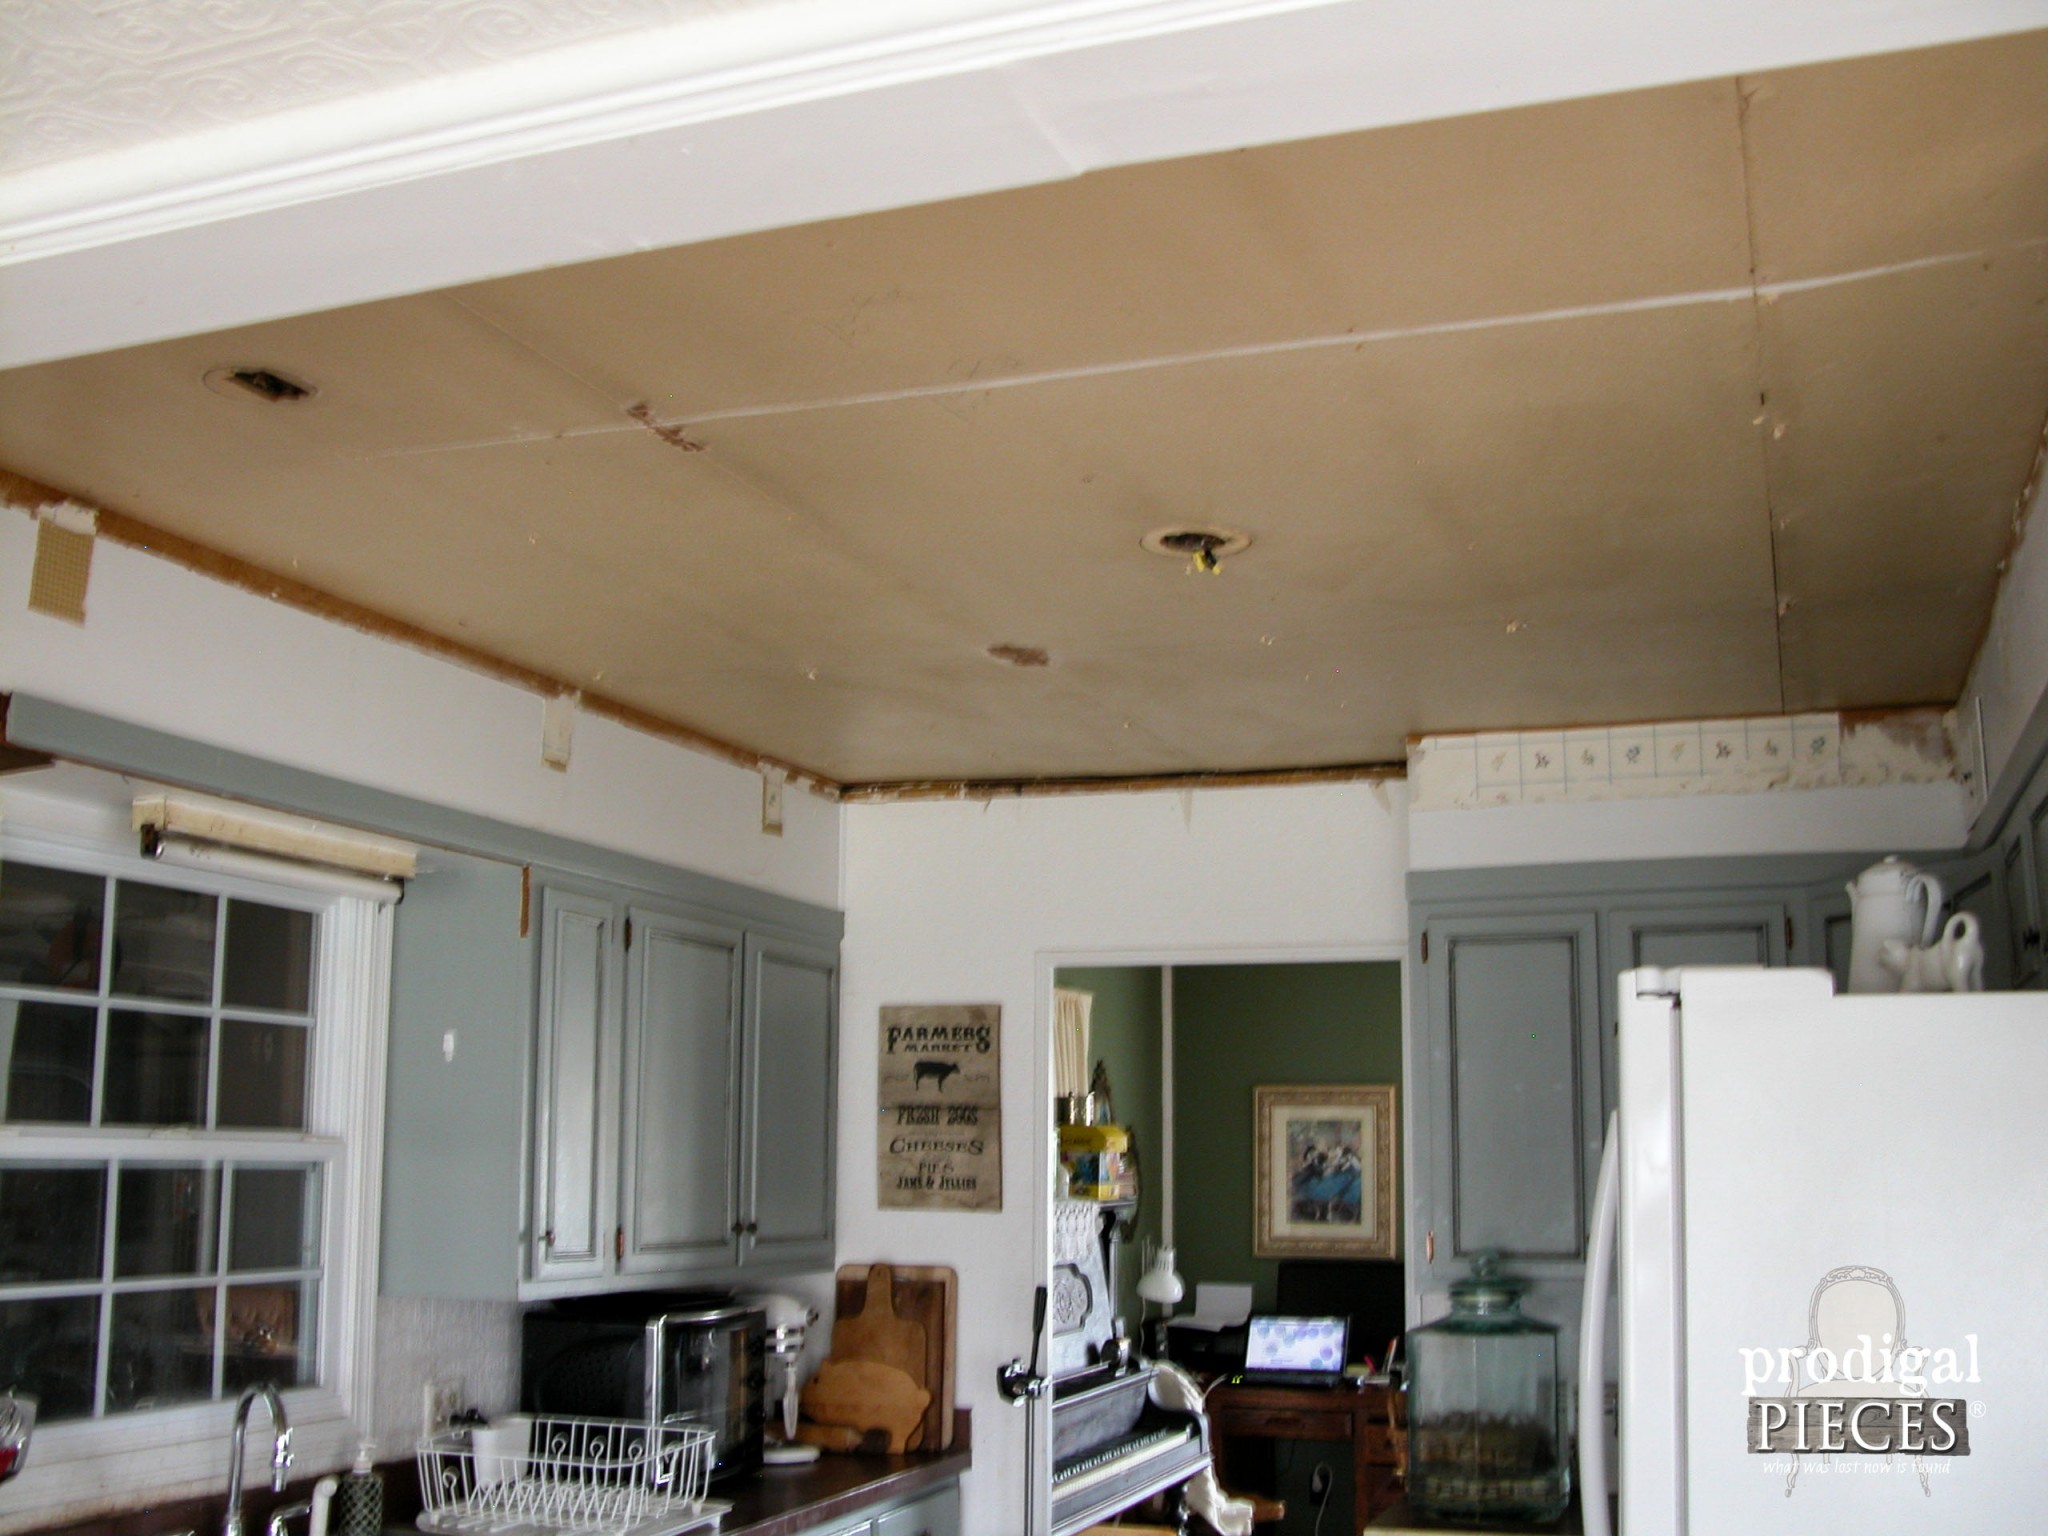 Kitchen Ceiling Restoration | Prodigal Pieces | www.prodigalpieces.com